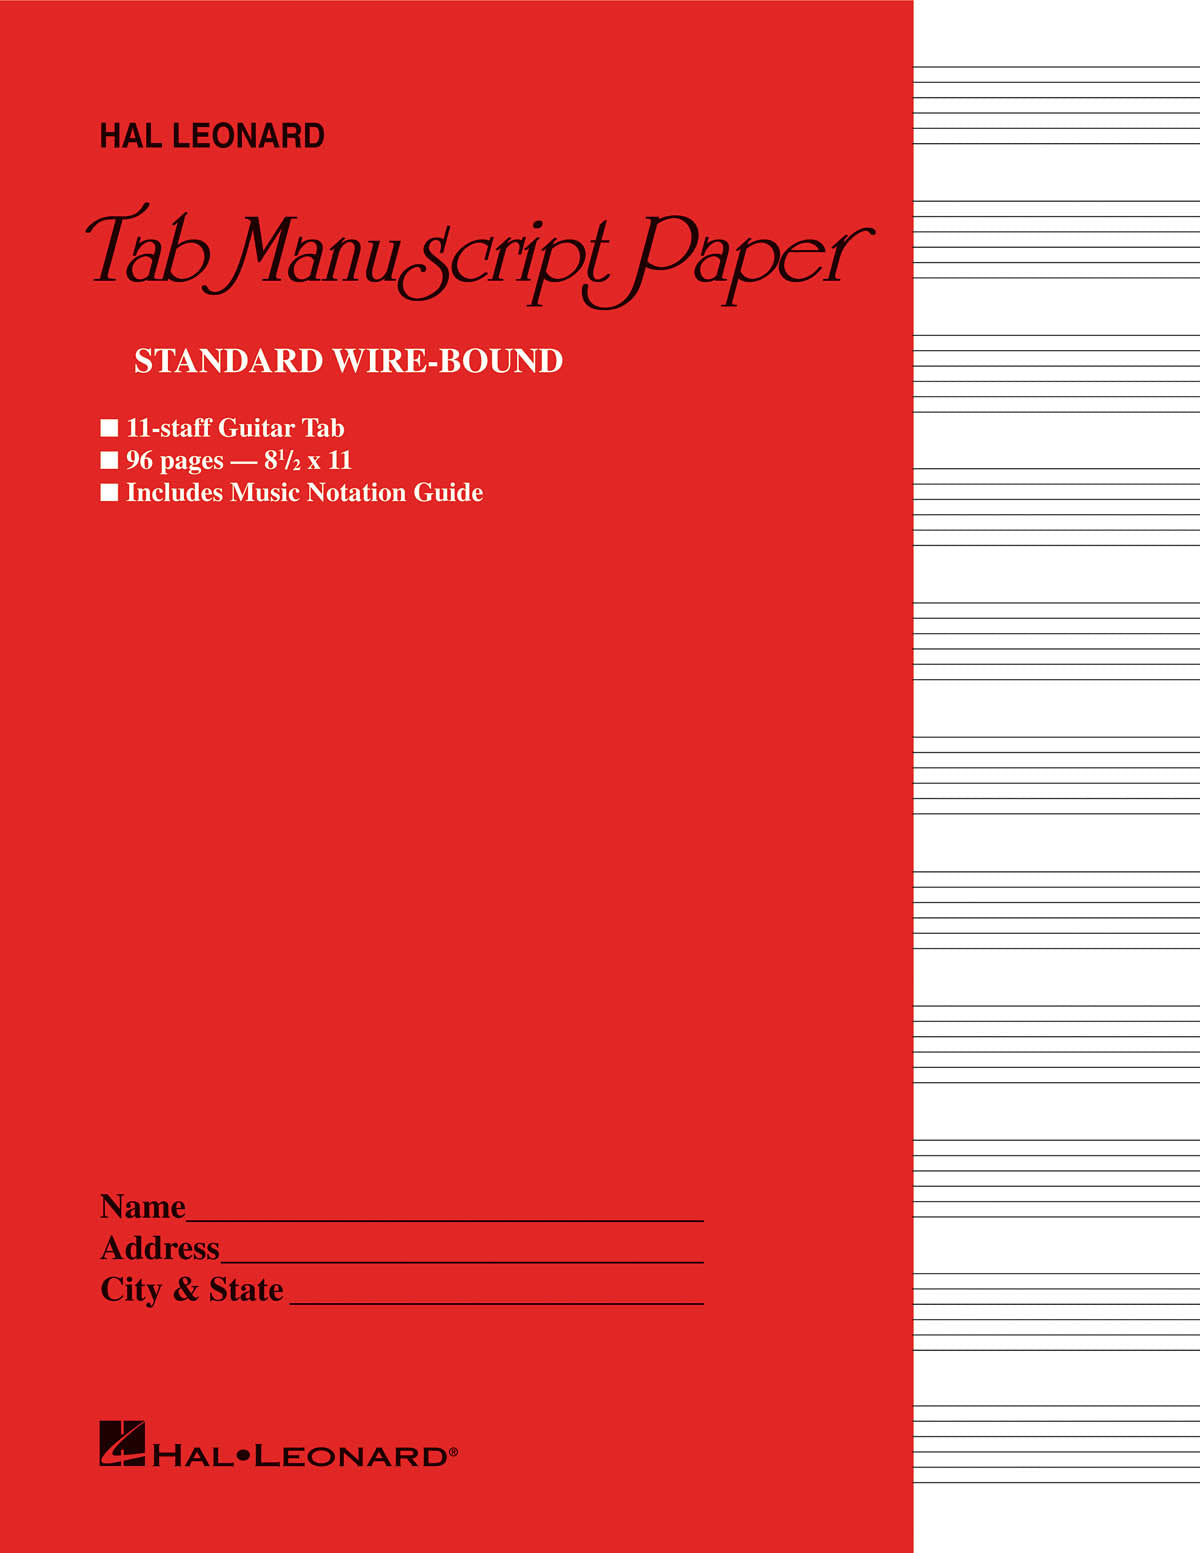 Cover of Guitar Tablature Manuscript Paper - Wire-Bound